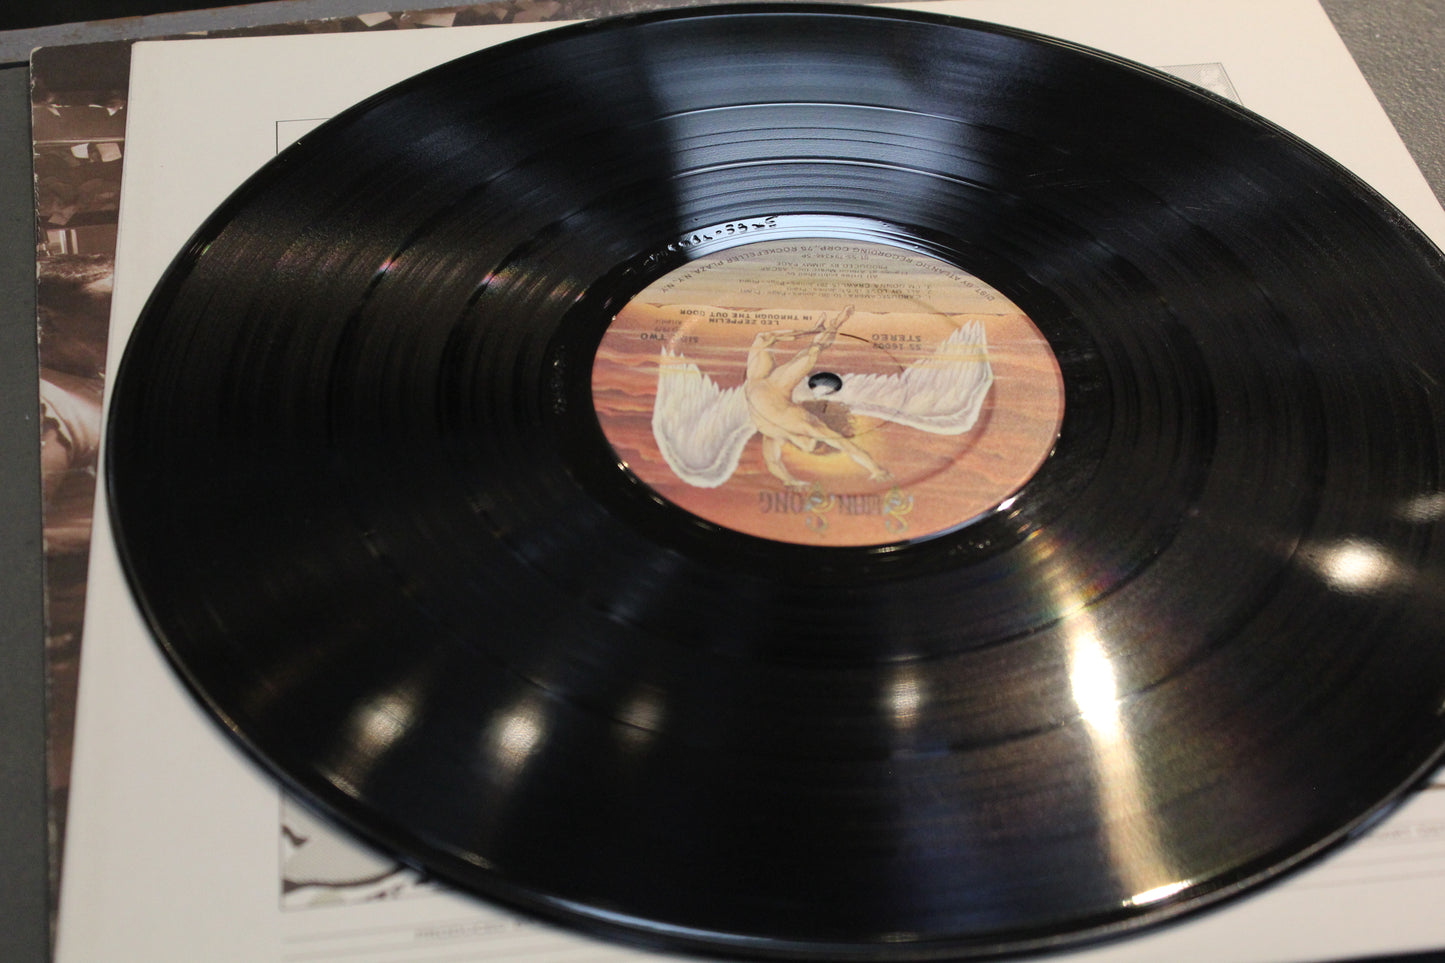 Led Zeppelin in Through The Outdoor (VG+) Vinyl record